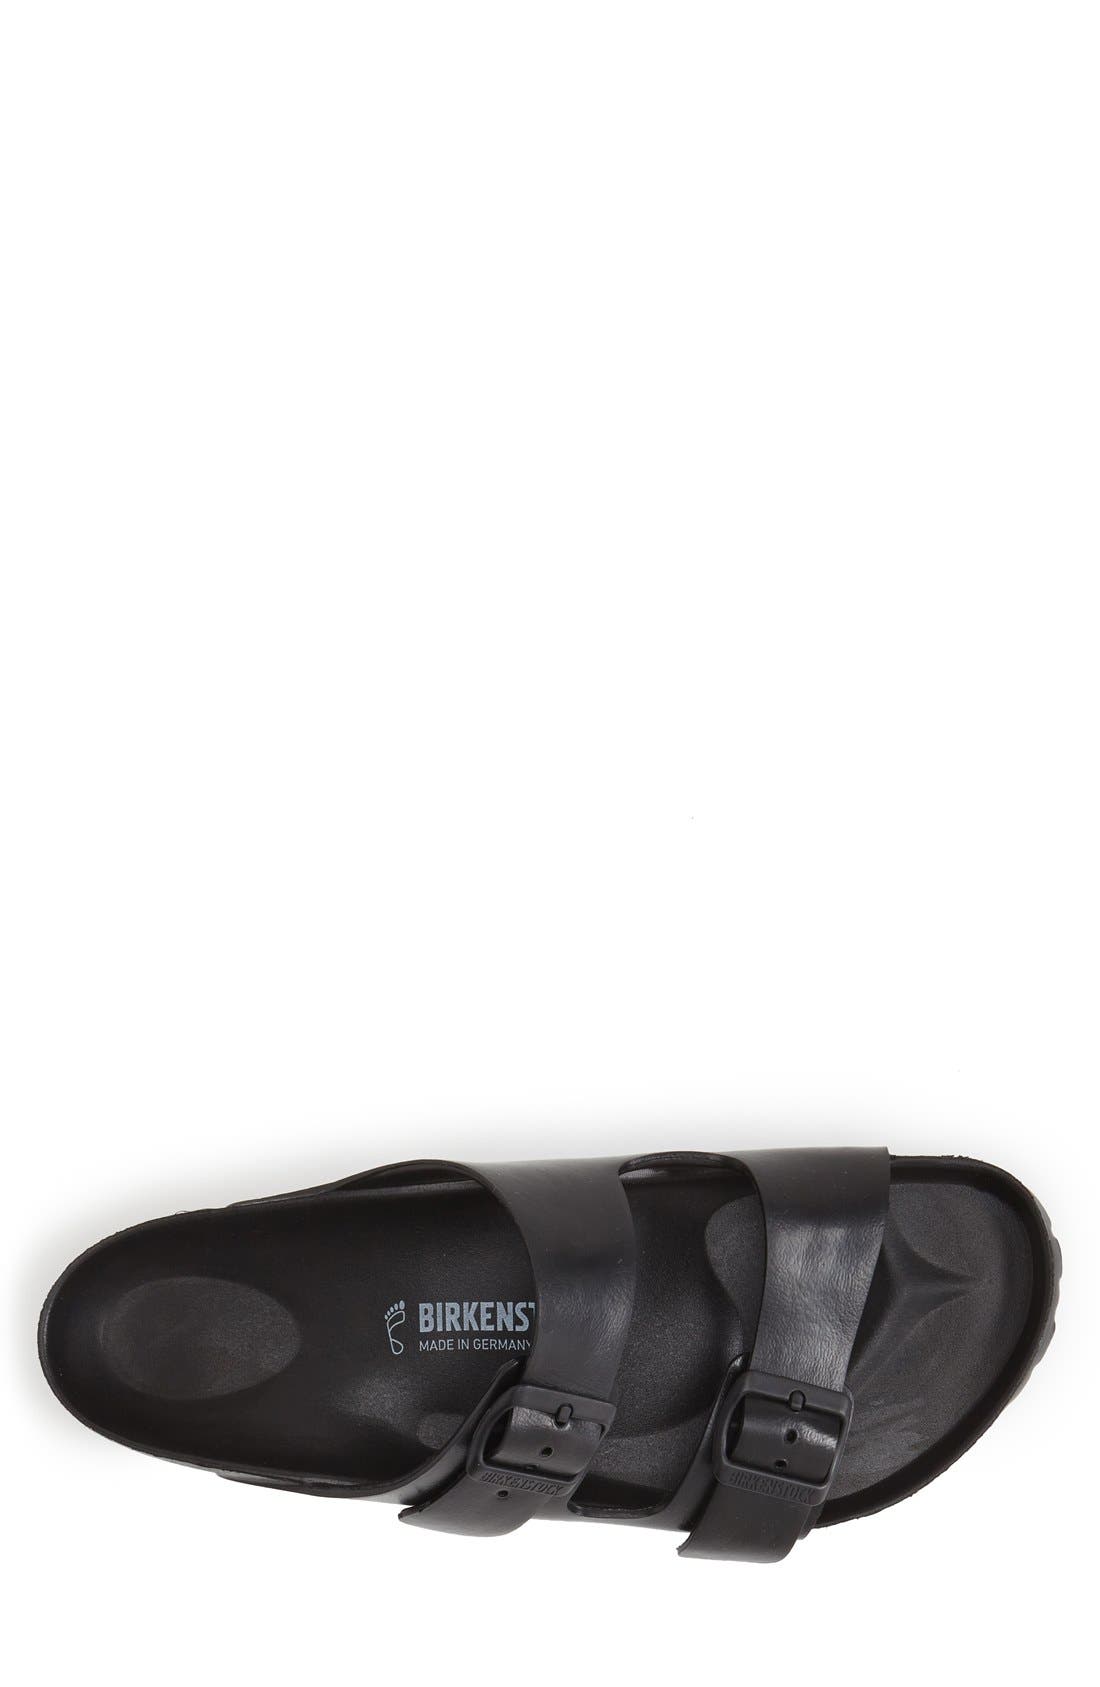 birkenstock arizona waterproof classic footbed sandal